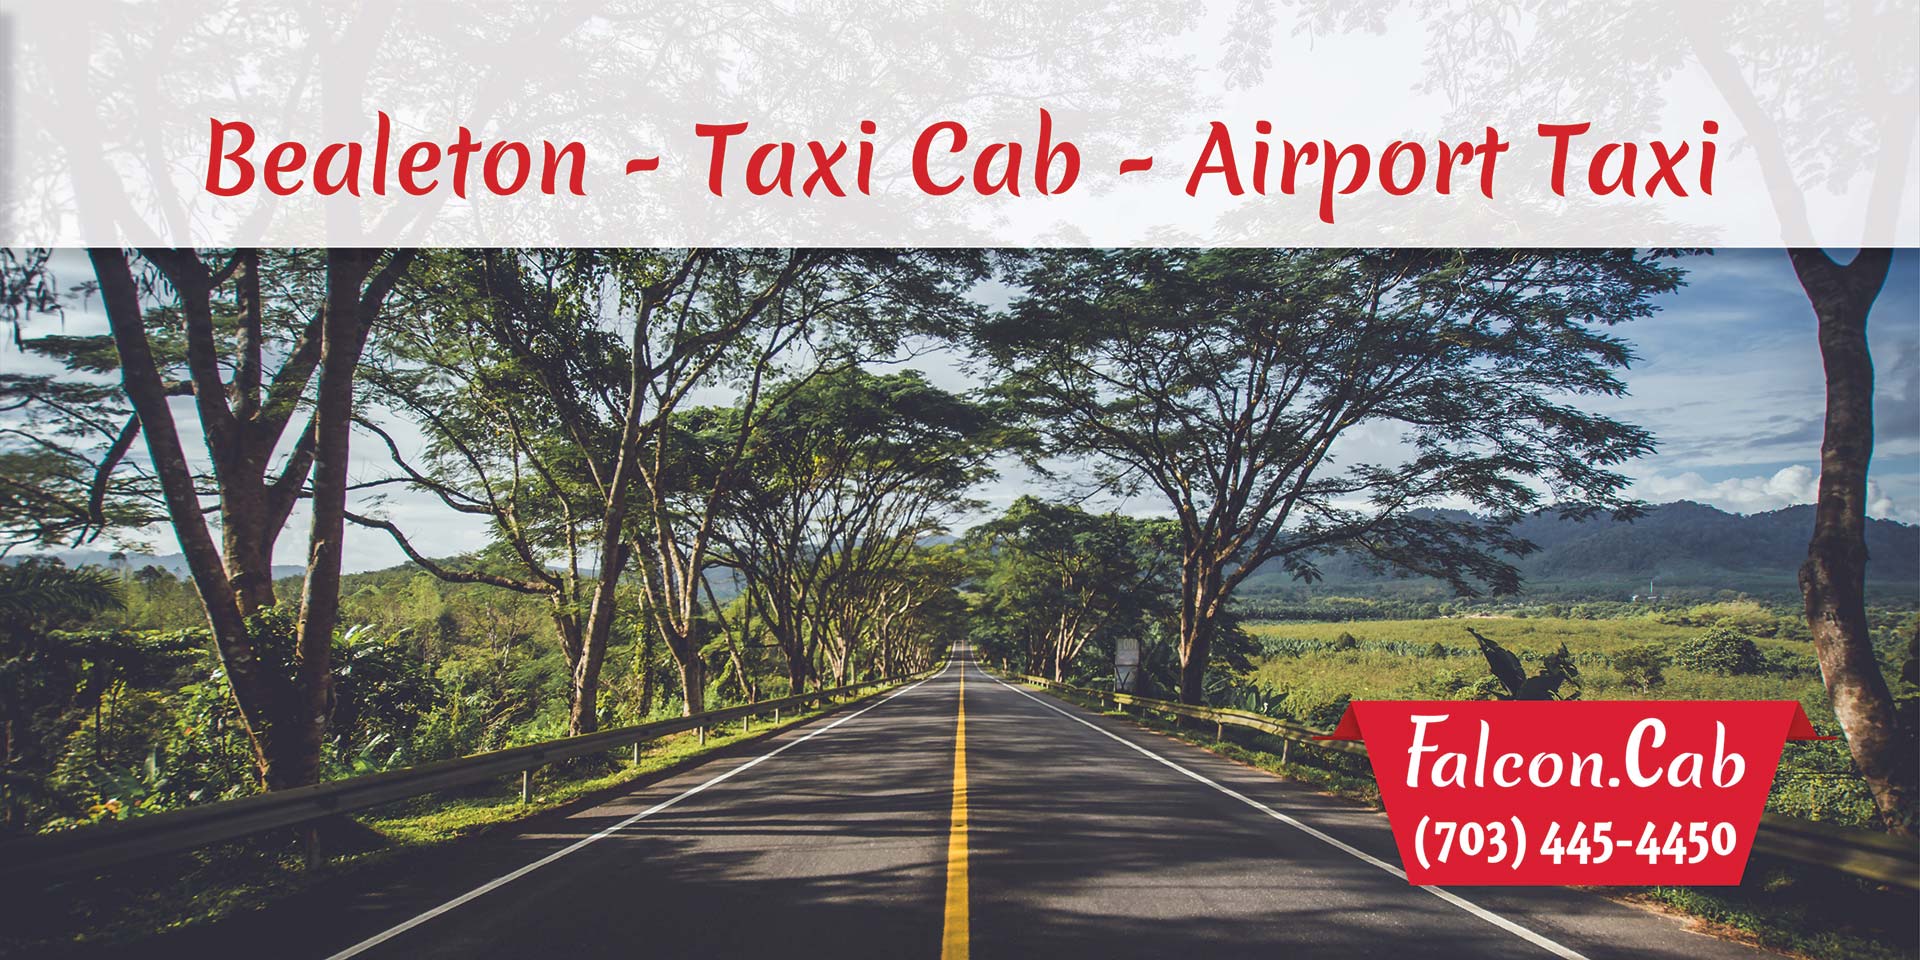 Bealeton Taxi Cab | Airport Taxi | Taxi in Bealeton, VA | Call (703) 445-4450